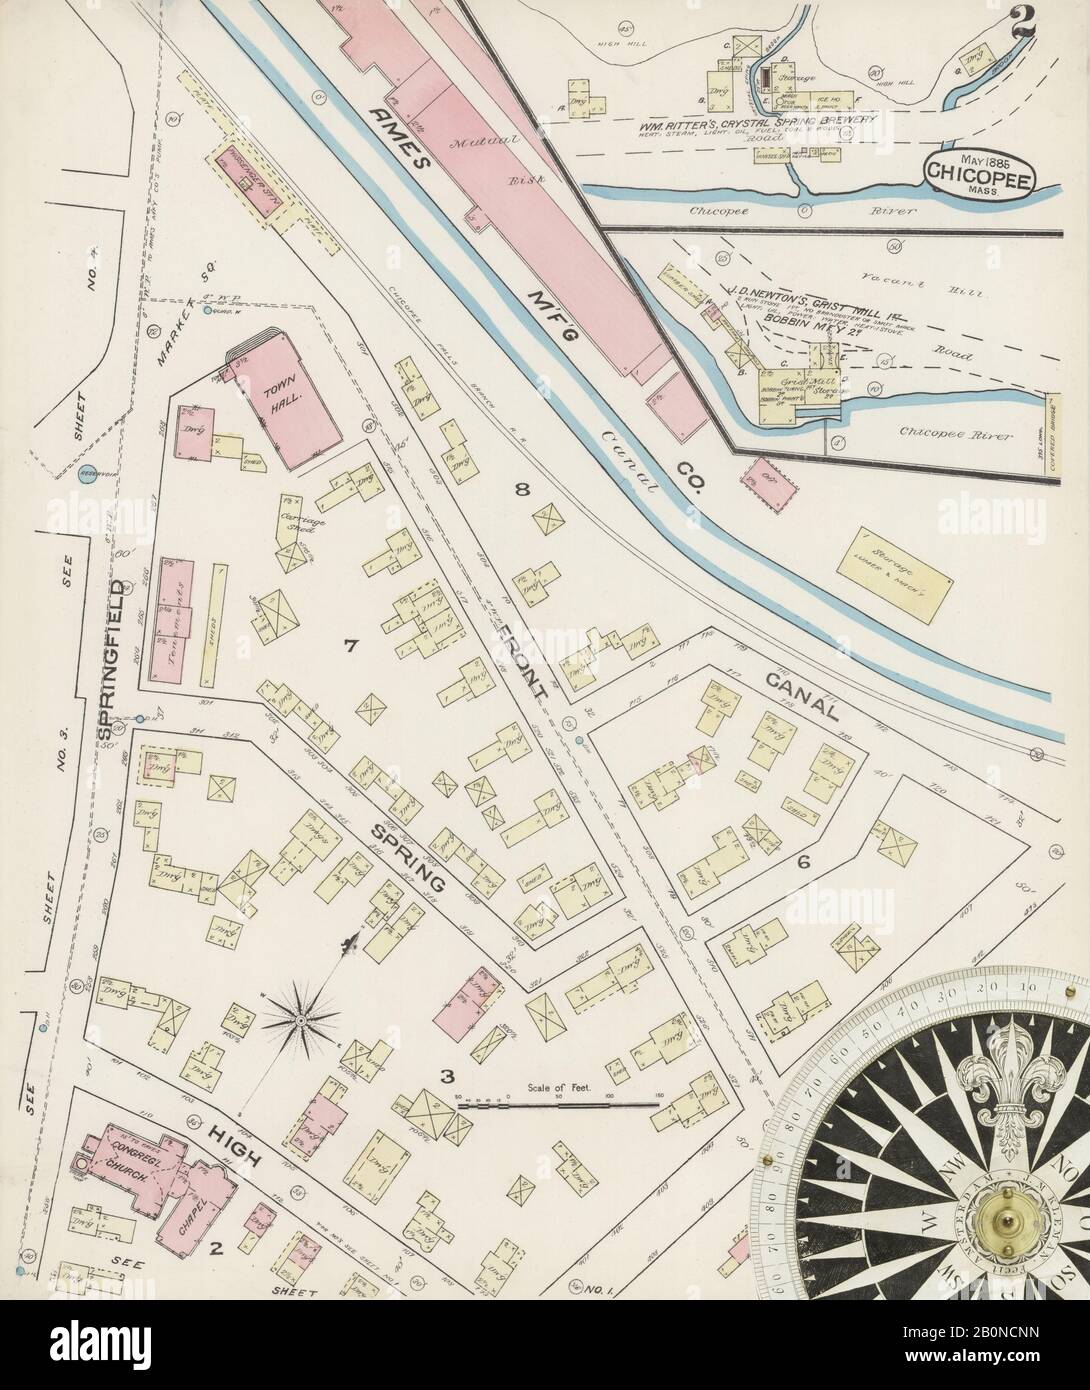 Bild 2 von Sanborn Fire Insurance Map aus Chicopee, Hampden County, Massachusetts. Mai 1885. 6 Blatt(e), Amerika, Straßenkarte mit einem Kompass Aus Dem 19. Jahrhundert Stockfoto